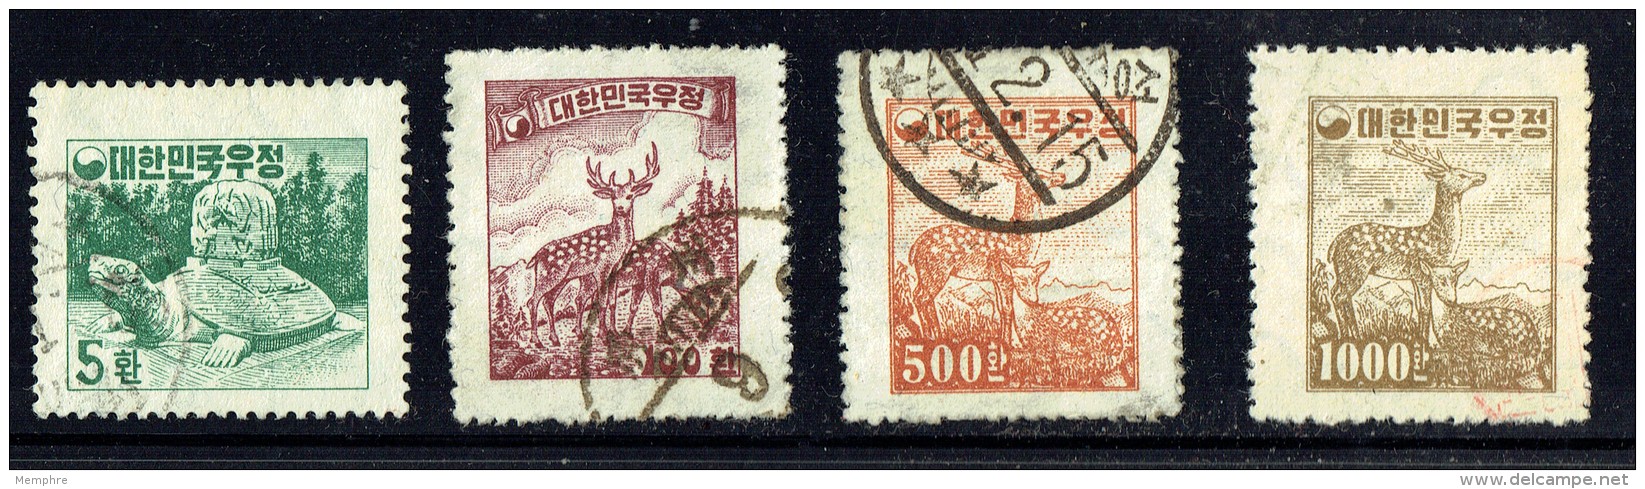 1954  New Definitives  Sc 196-9  Used - Corea Del Sur